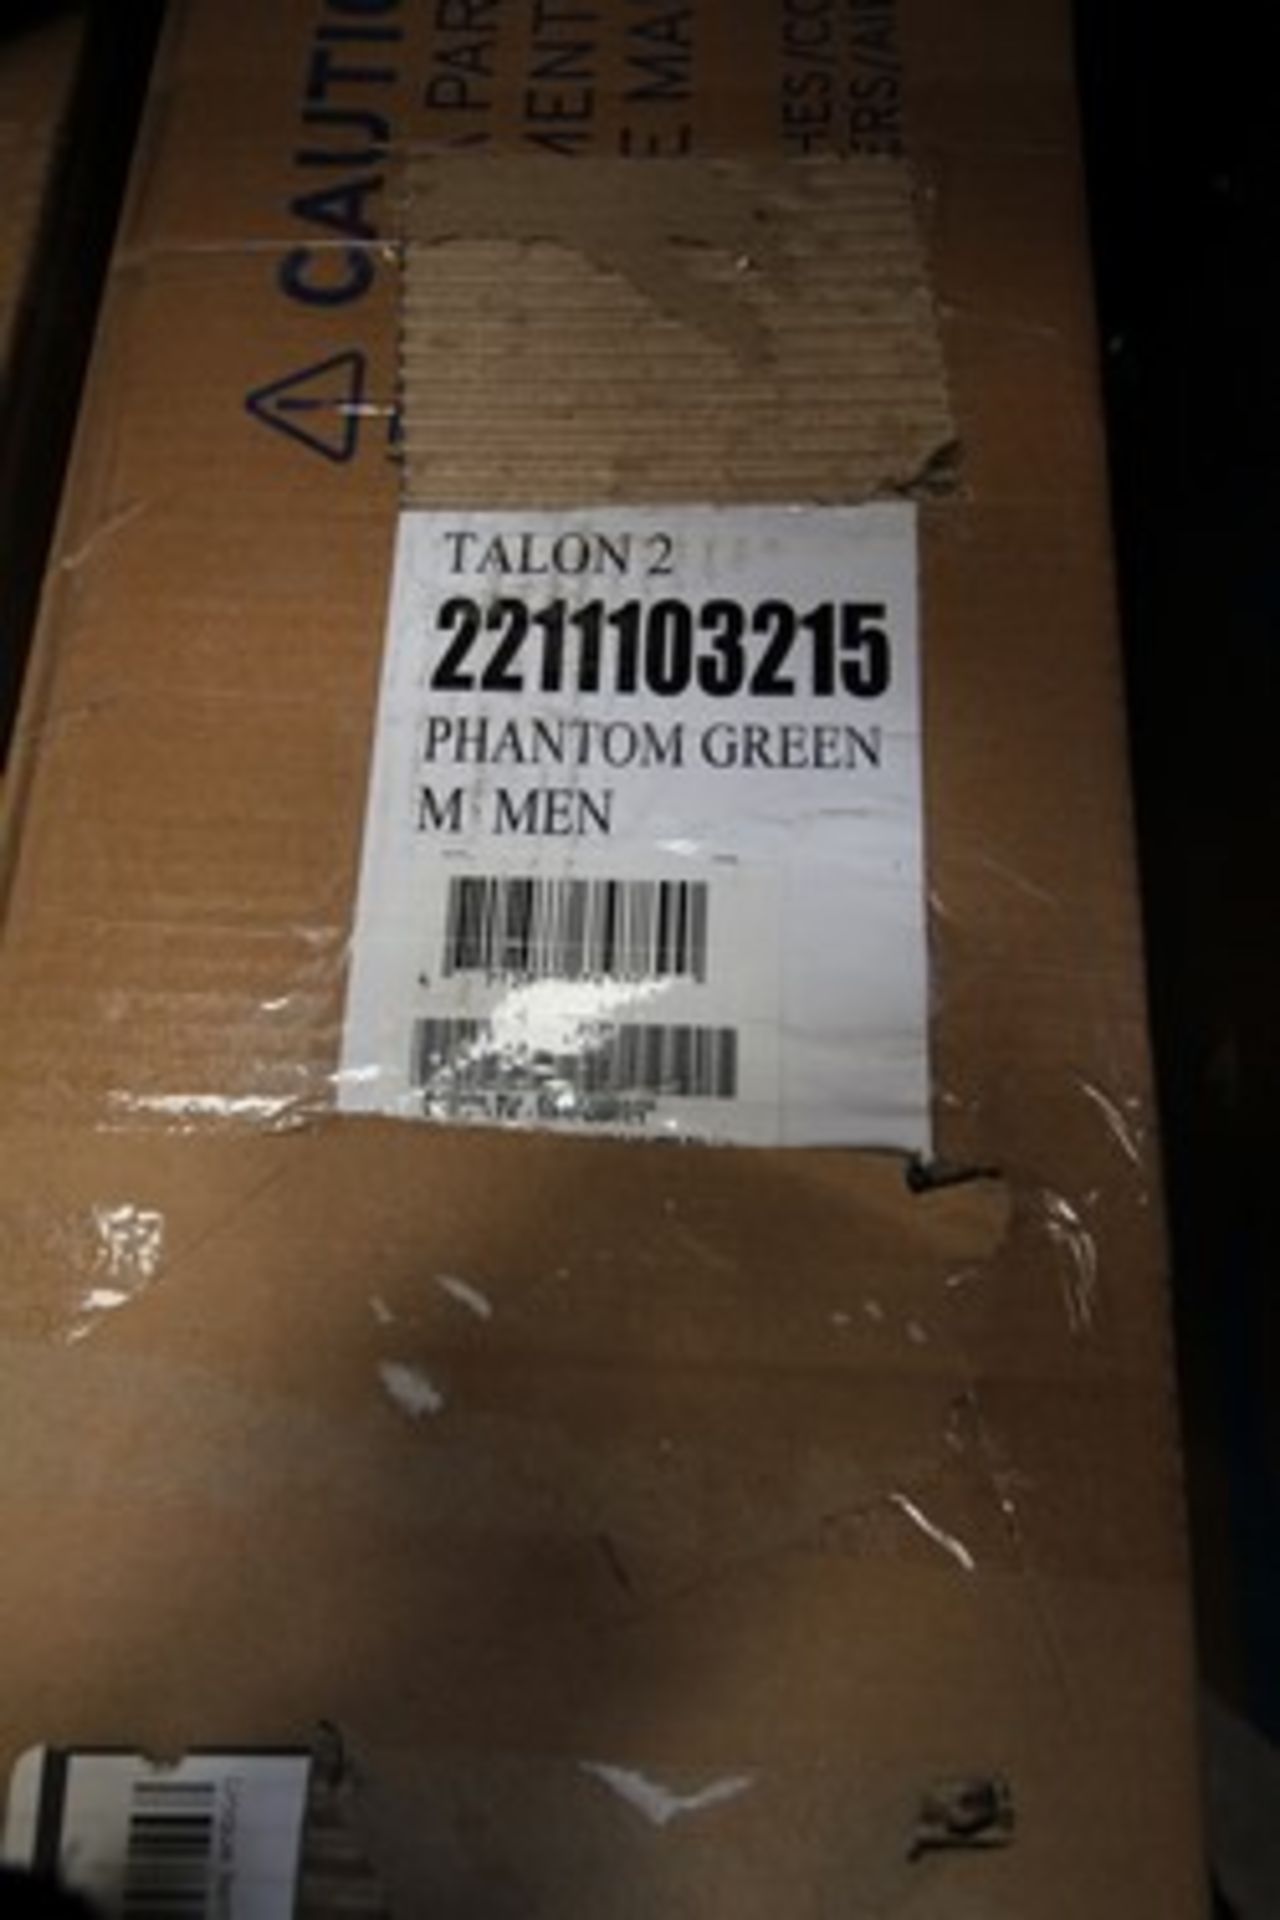 1 x Giant Talon 2 men's bike, size M, colour phantom green, code 2211103215 - New in box (GS19)